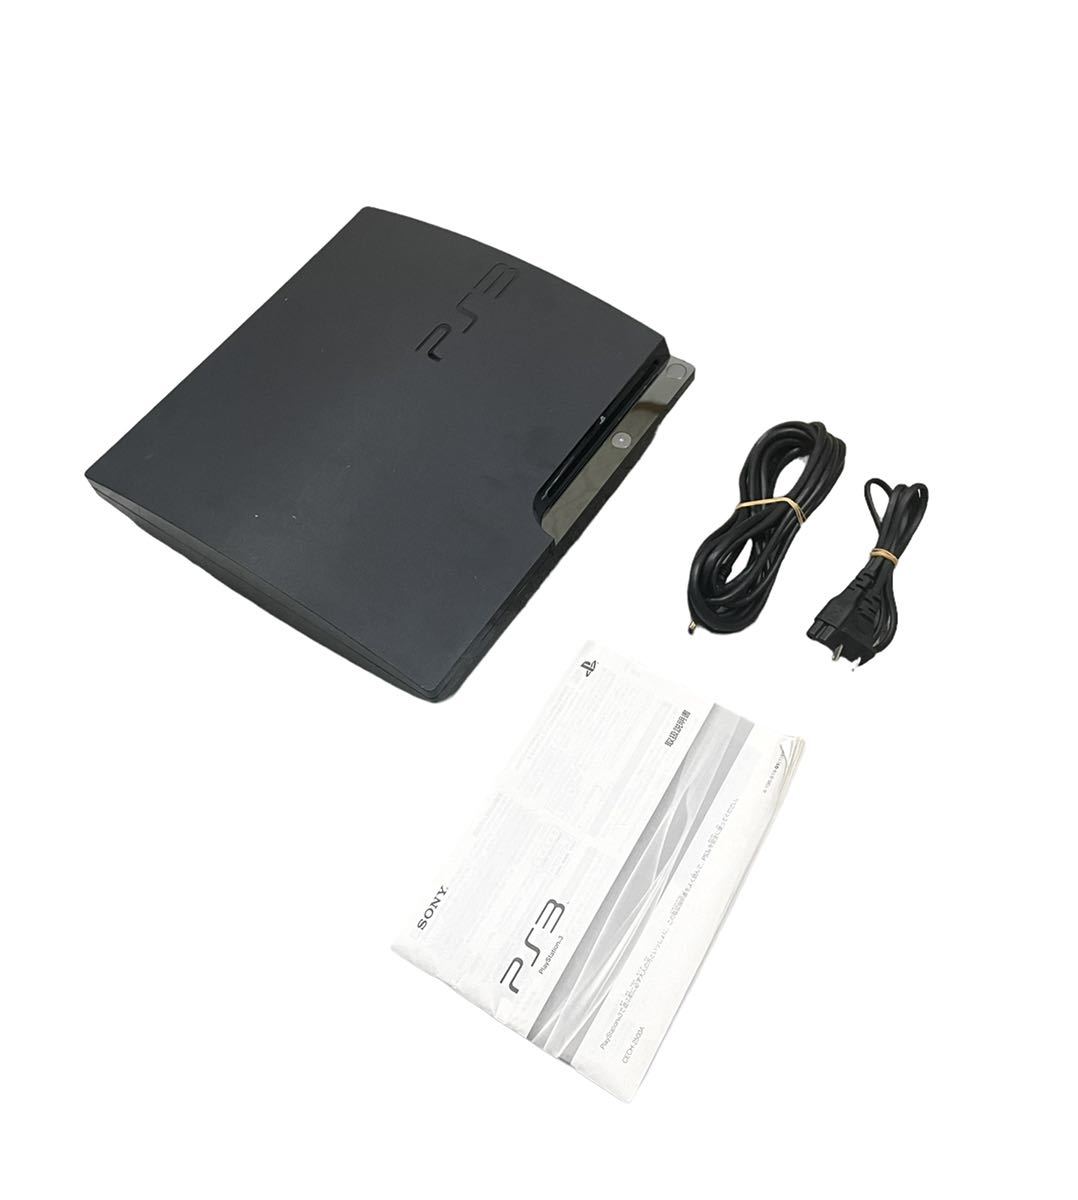 SIE プレイステーション3 HDD 160GB チャコール・ブラック CECH-2500A 